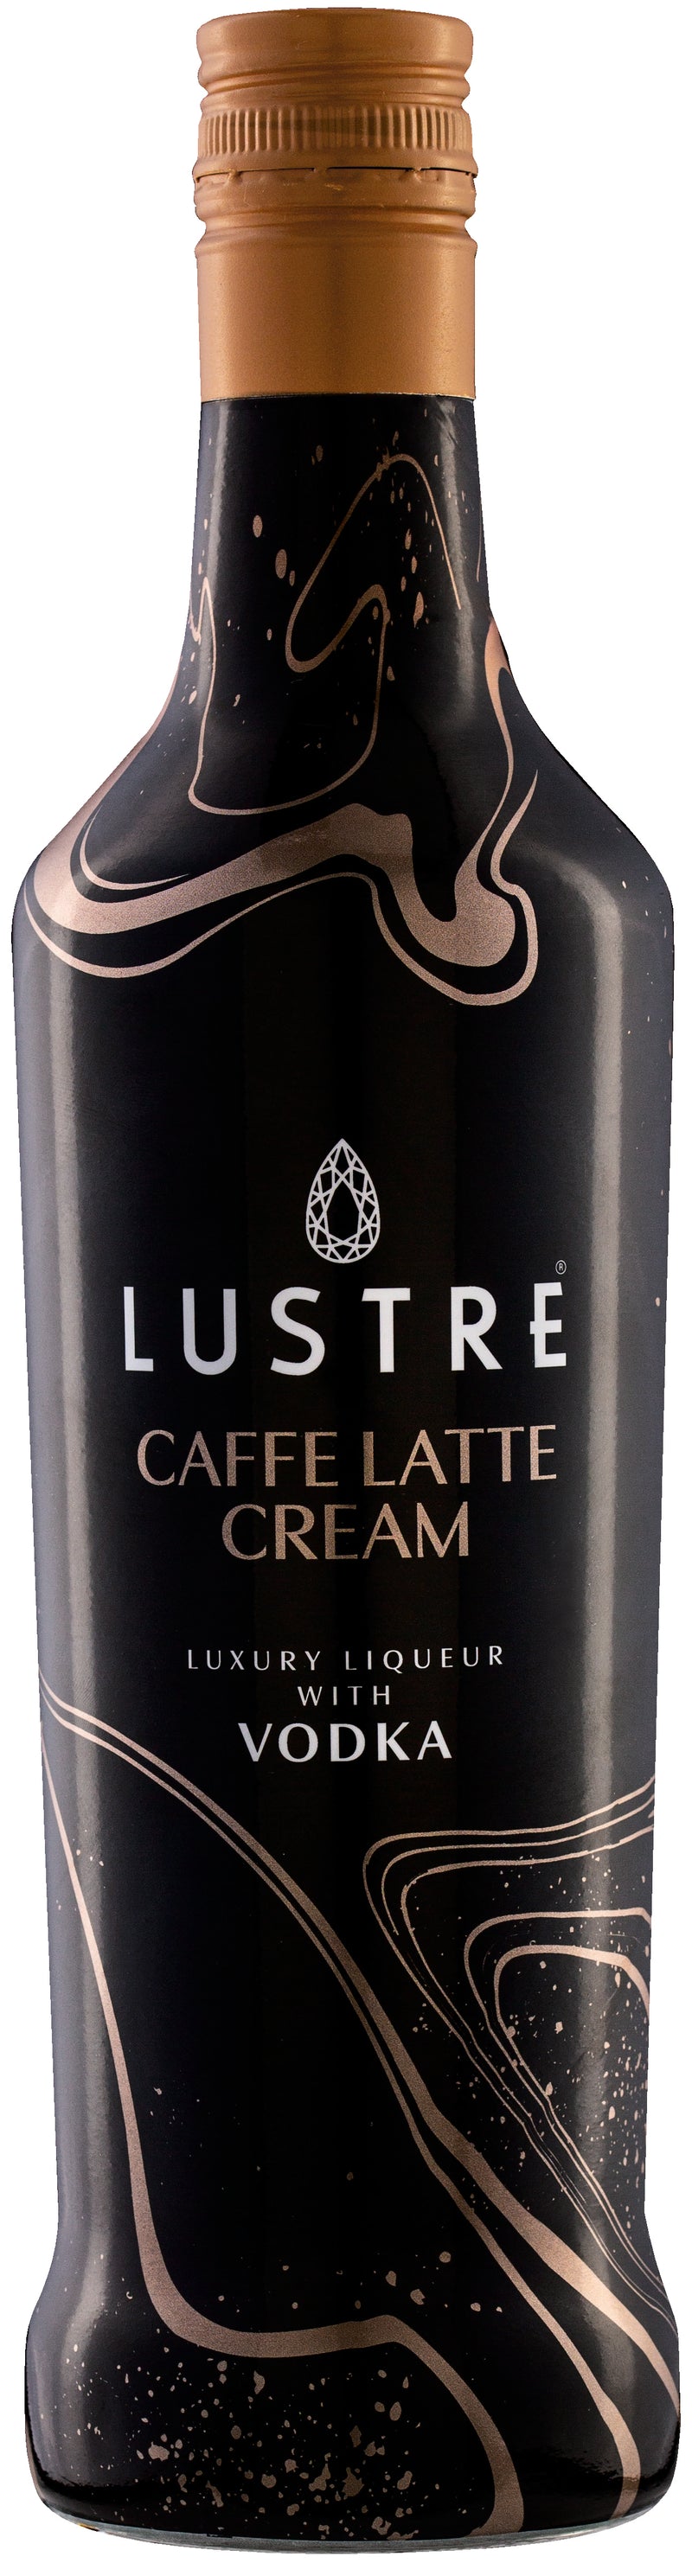 Lustre Caffe Latte Cream with Vodka 70cl